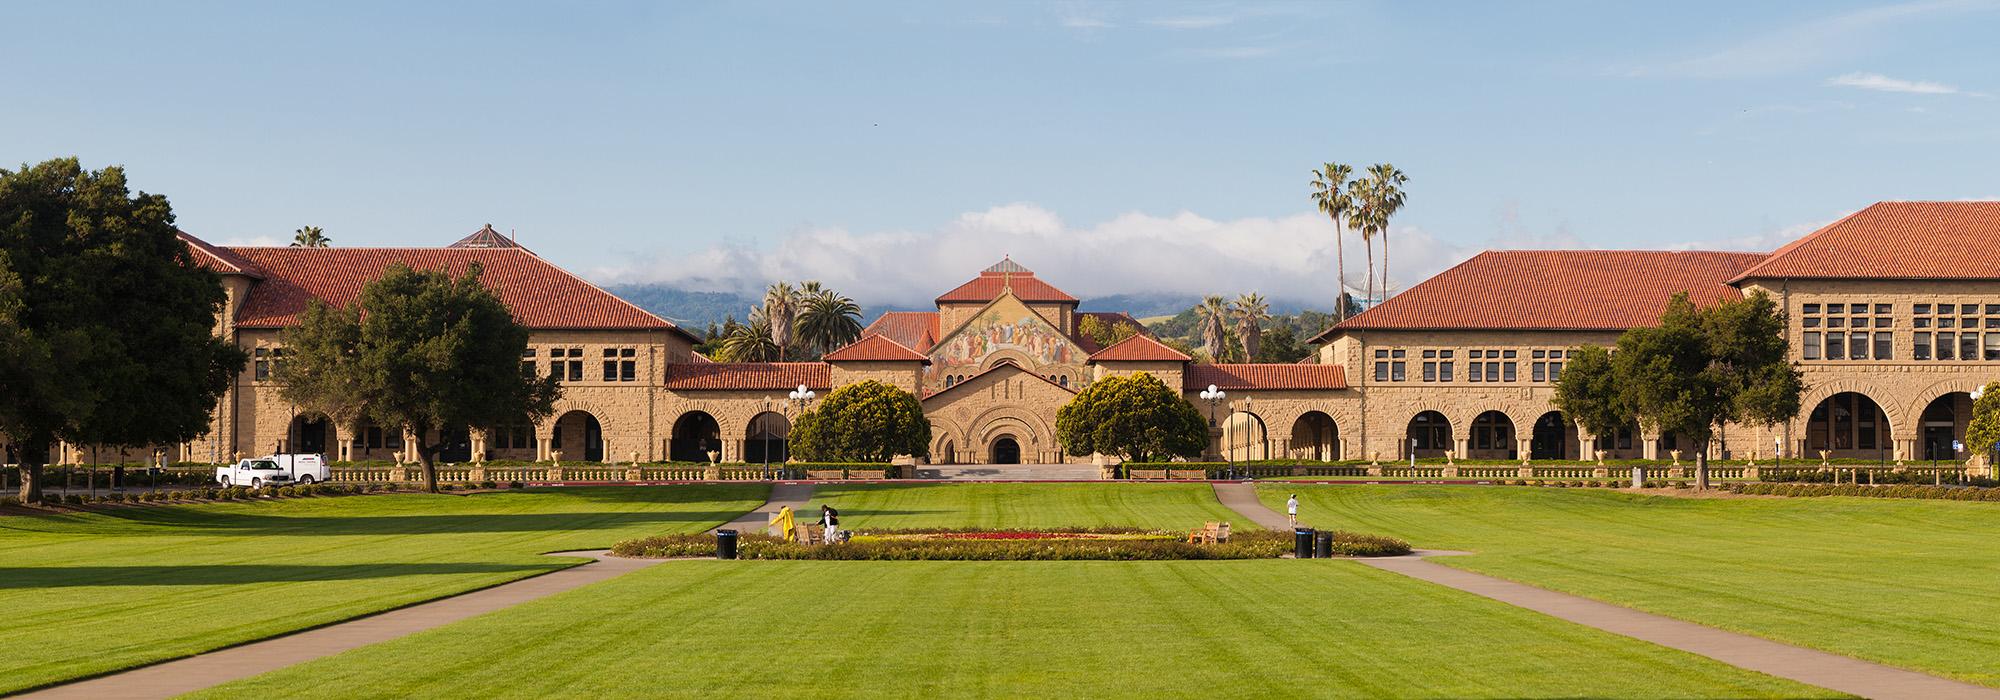 CA_Stanford_StanfordUniversity_courtesyWikimediaCommons_2011_005_Hero.jpg